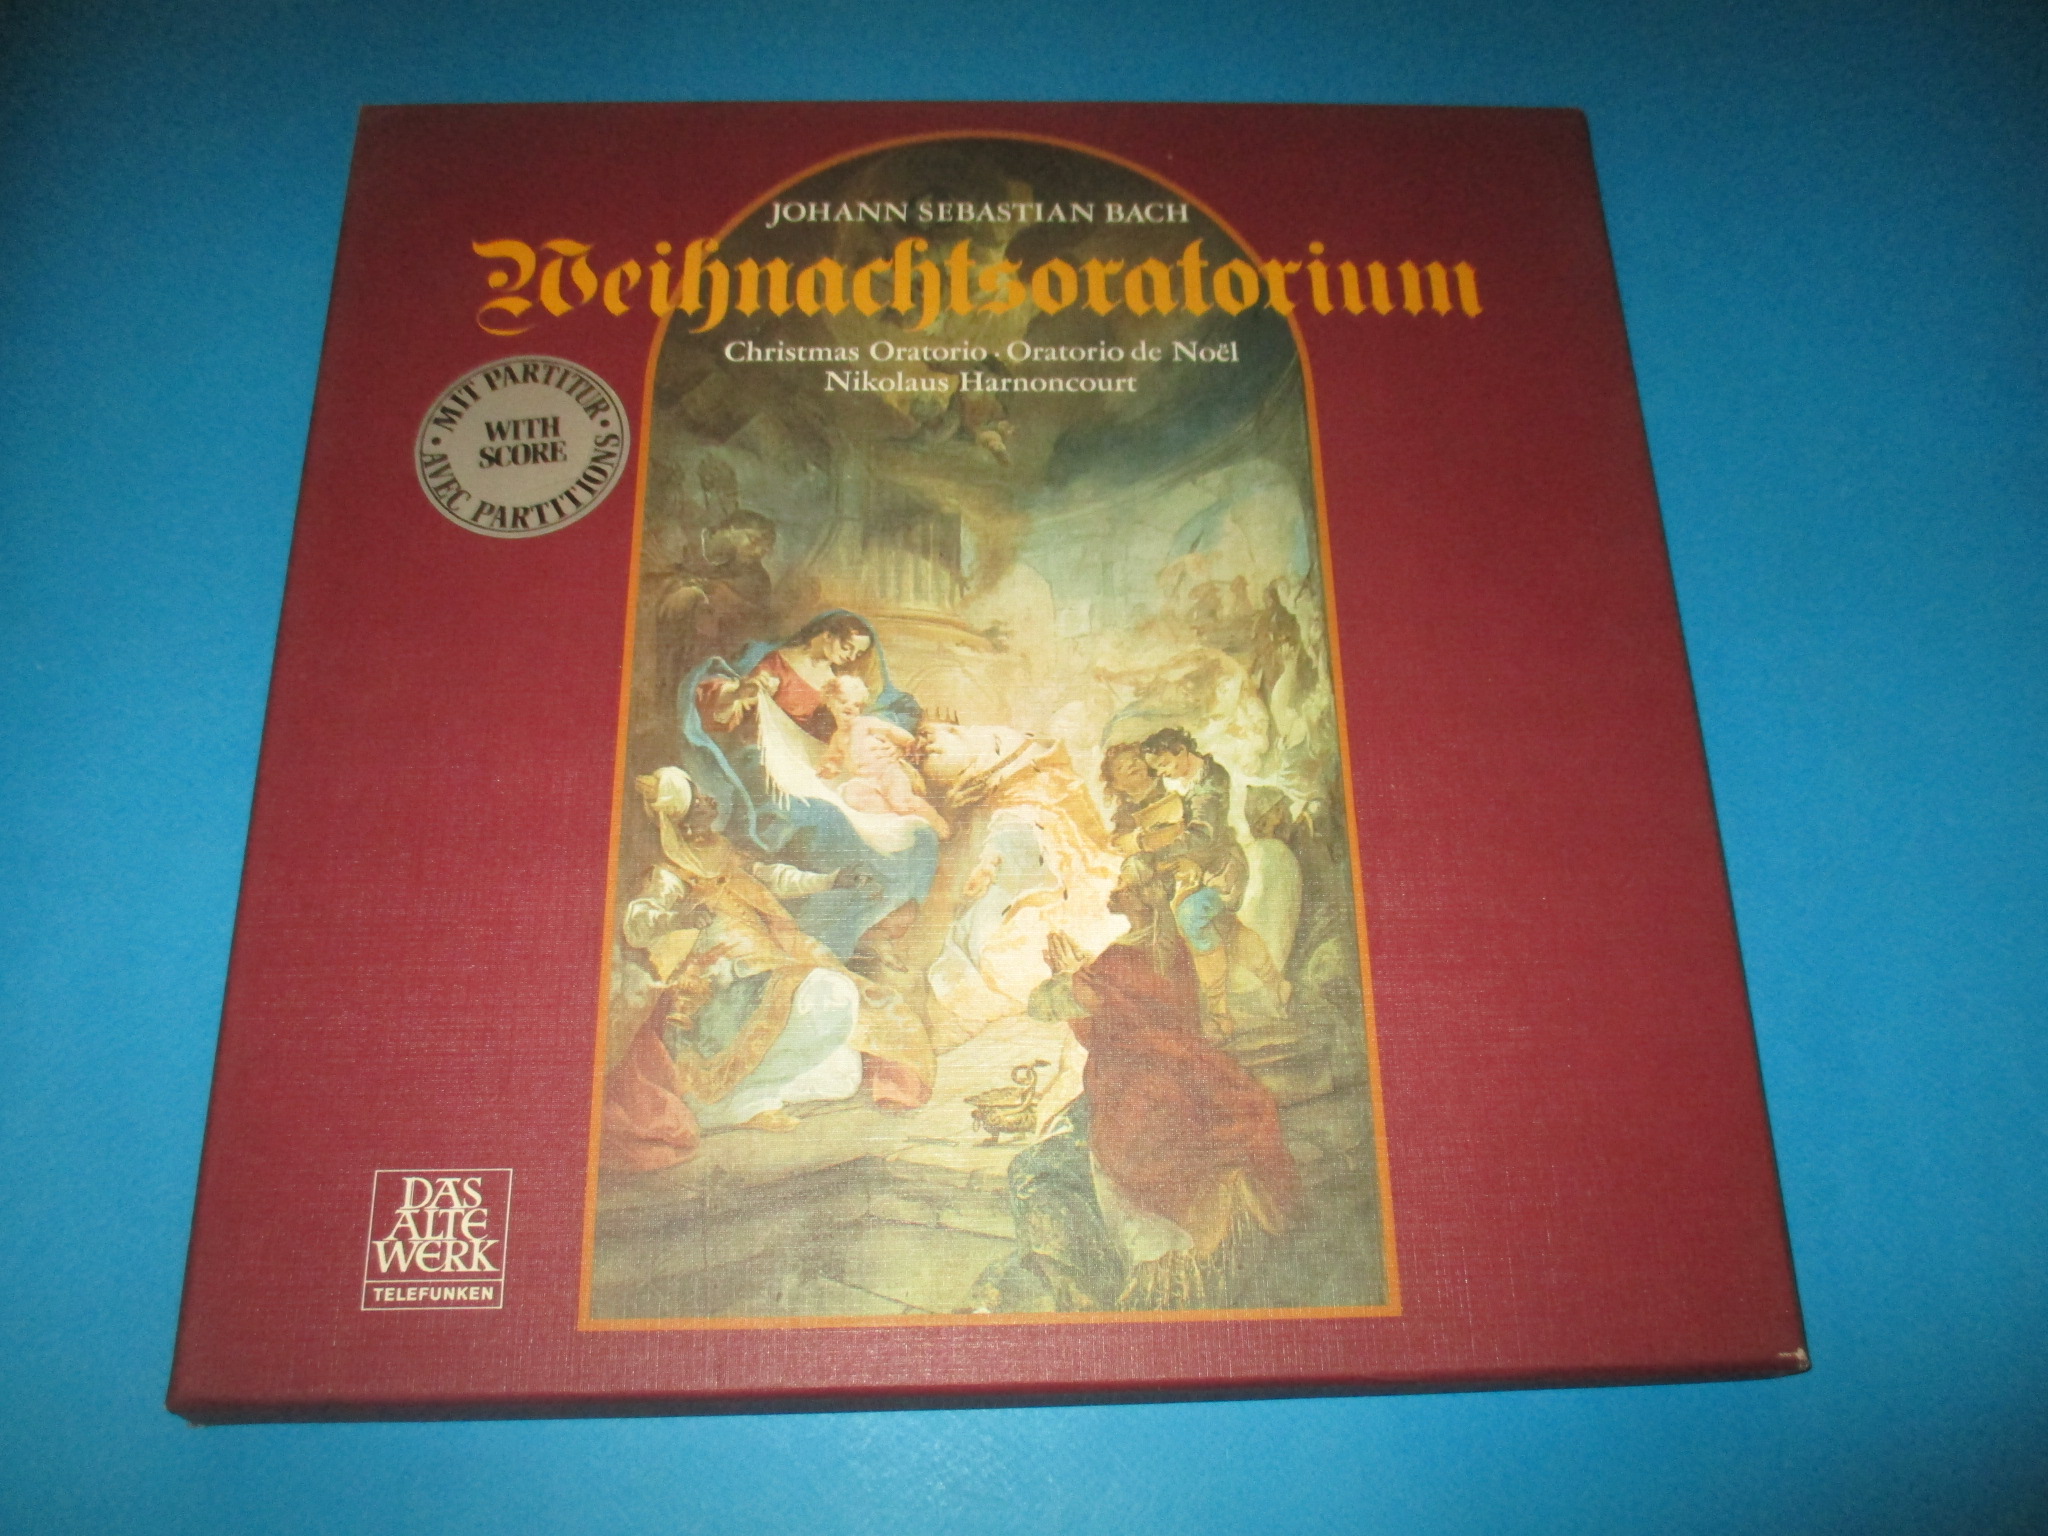 Coffret 3 disques Weihnachtsoratorium, Oratorio de Noël, Johann Sebastian Bach, Nikolaus Harnoucourt, 3 x 33 tours Telefunken